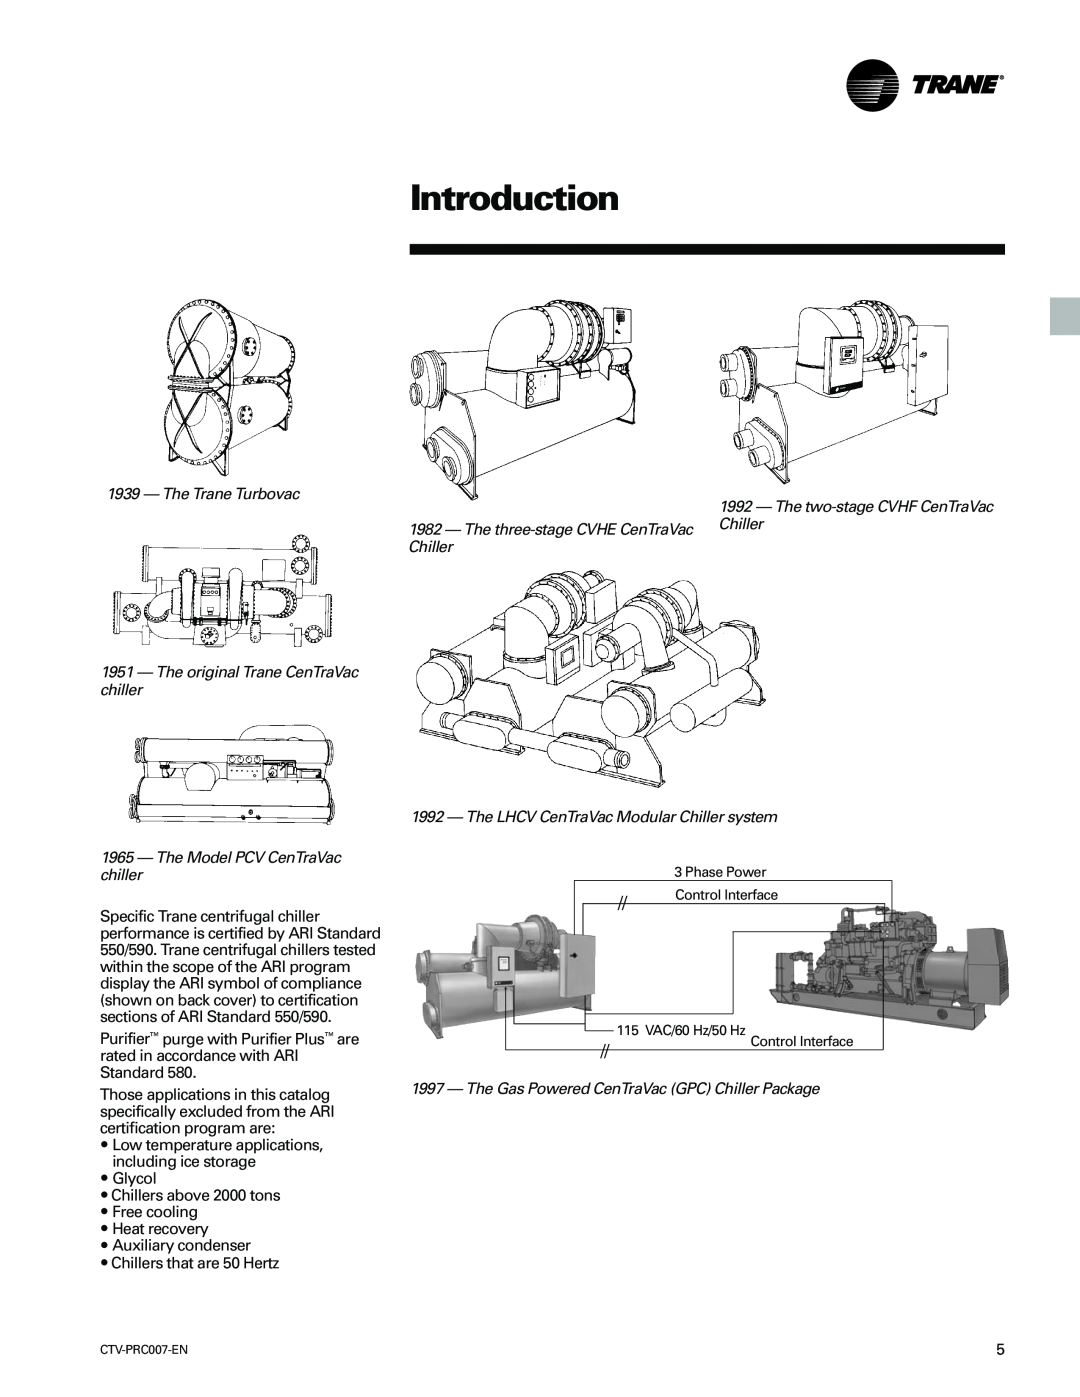 Trane ctv-prc007-en manual Introduction, The Trane Turbovac, The three-stageCVHE CenTraVac Chiller 